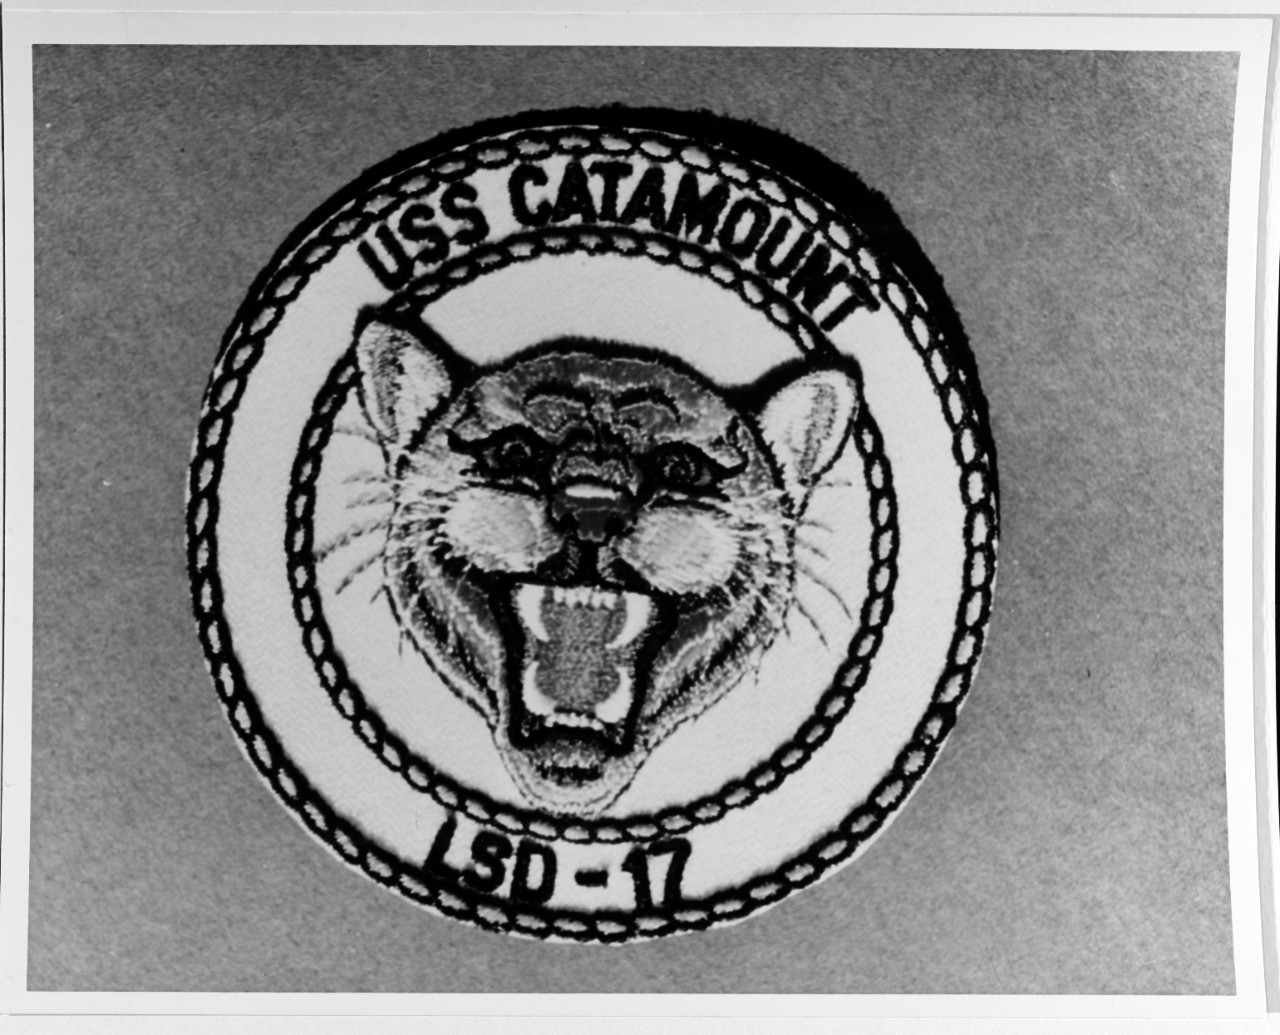 Insignia: USS CATAMOUNT (LSD-17)